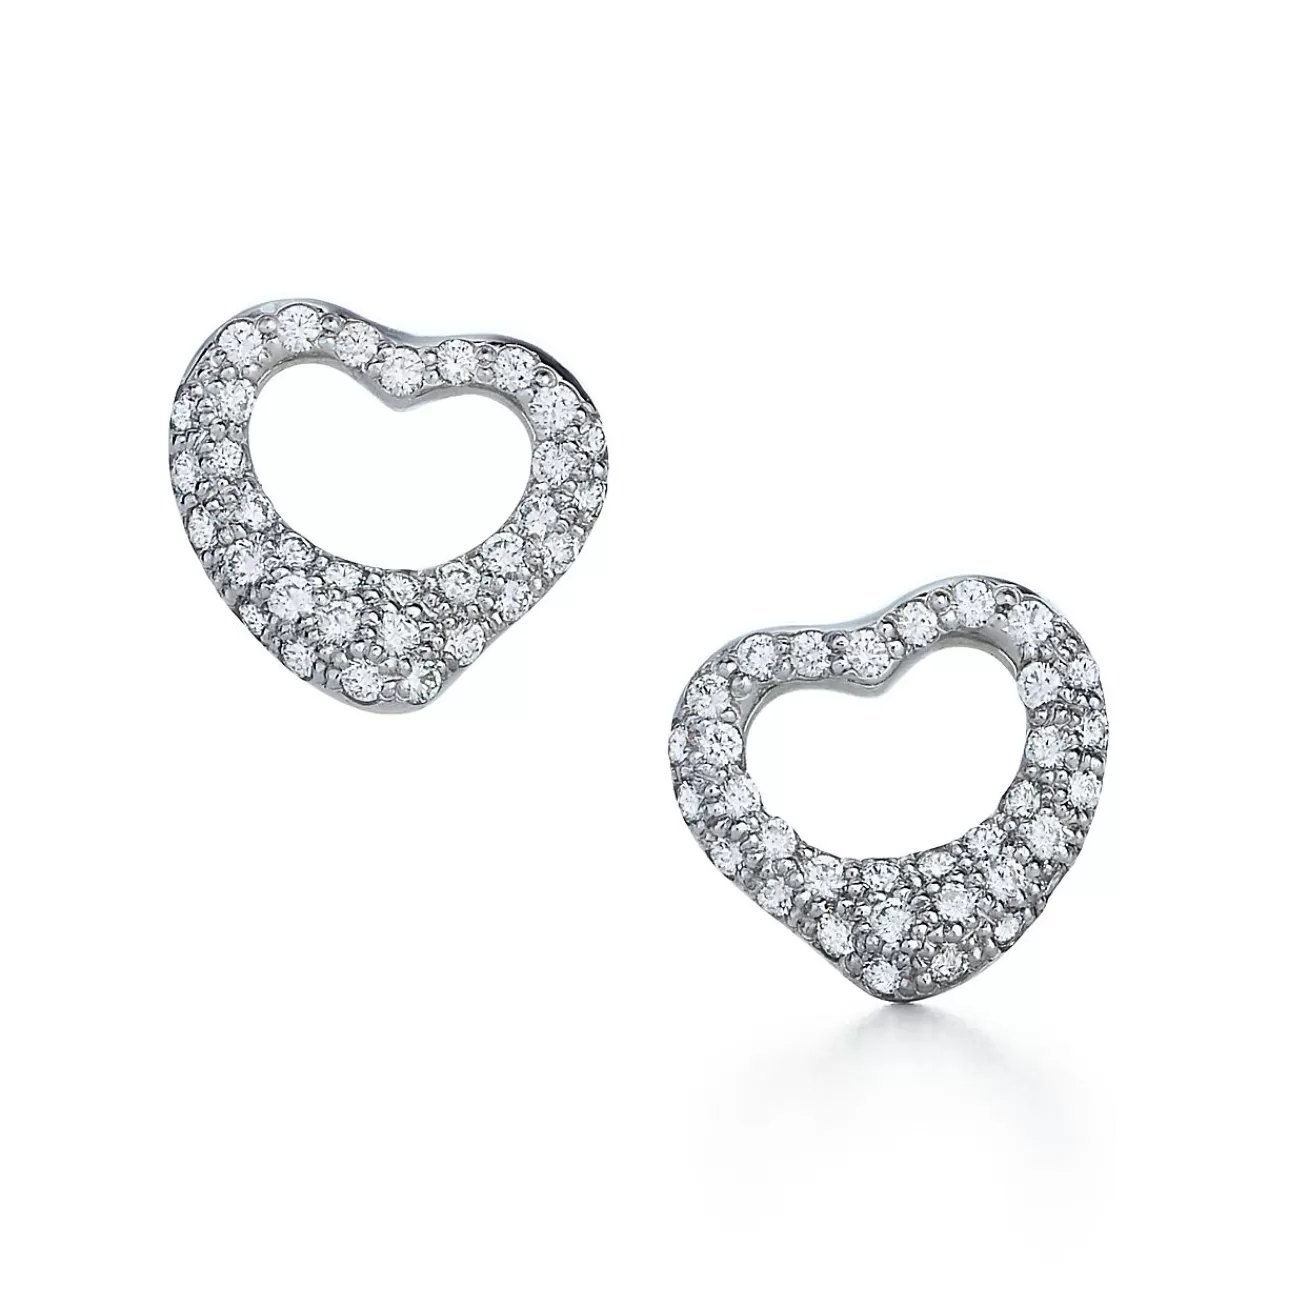 Tiffany & Co. Elsa Peretti® Open Heart Stud Earrings in Platinum with Pavé Diamonds, 11 mm | ^ Earrings | Platinum Jewelry